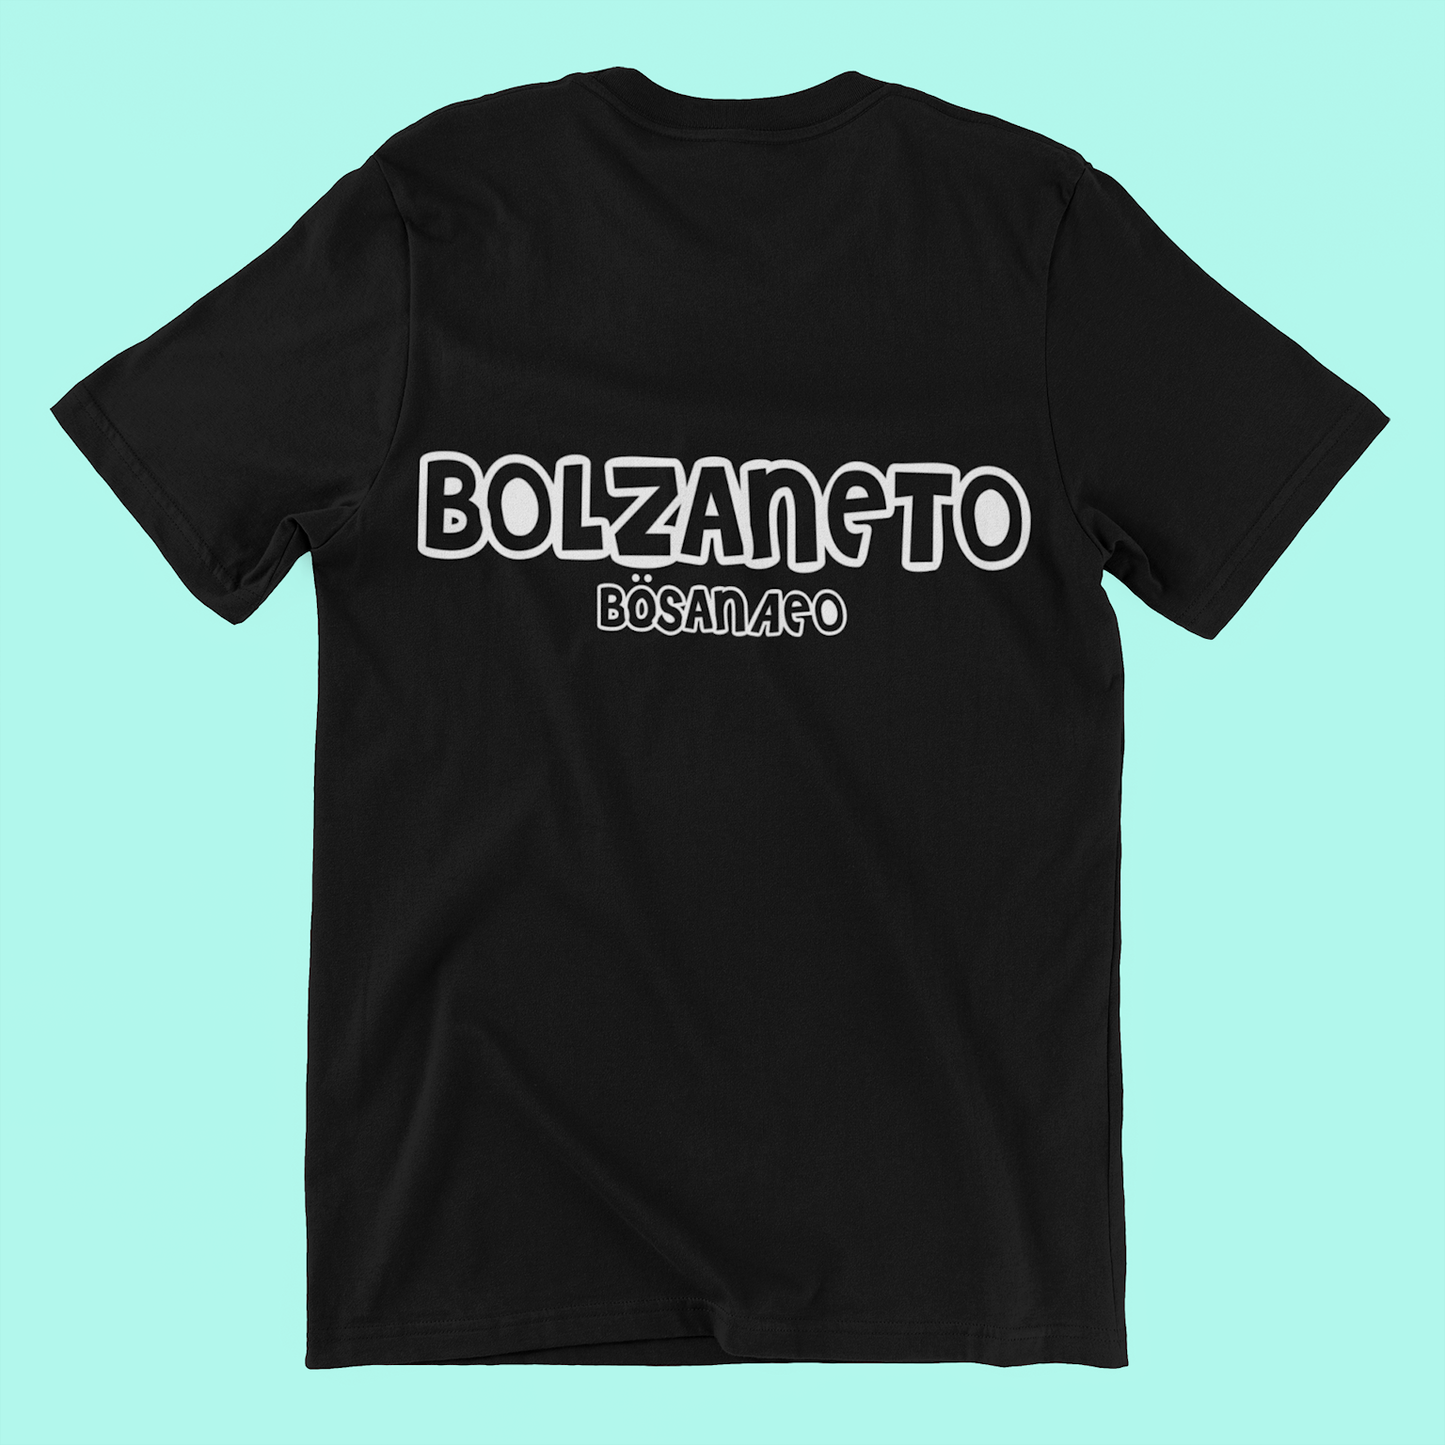 T-Shirt BOLZANETO in Zeneize